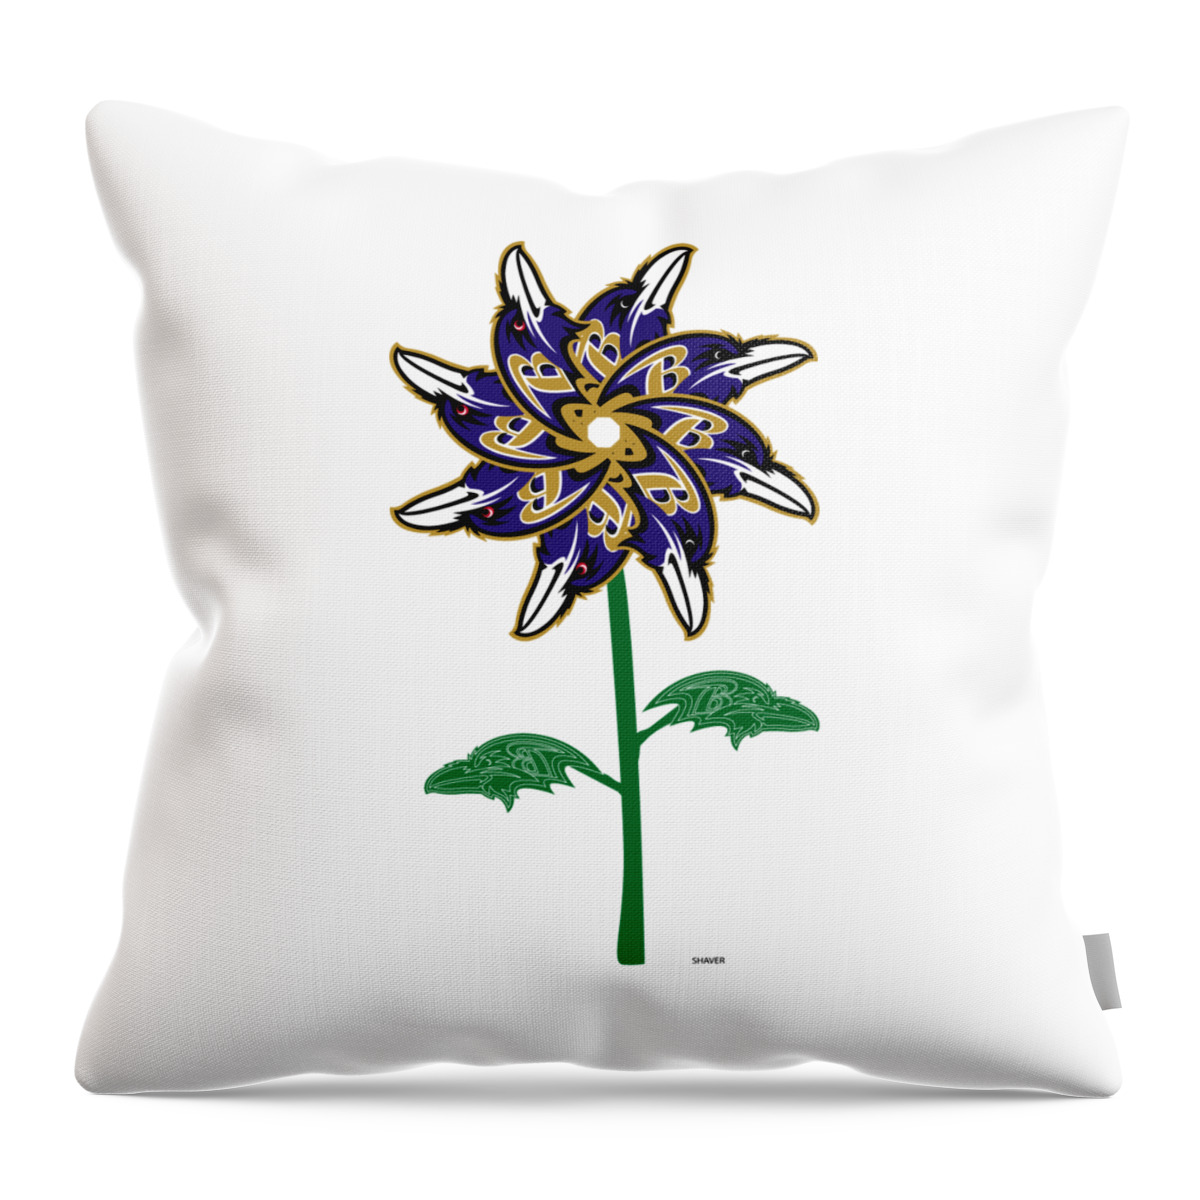 Nfl Throw Pillow featuring the digital art Baltimore Ravens - NFL Football Team Logo Flower Arty by Steven Shaver